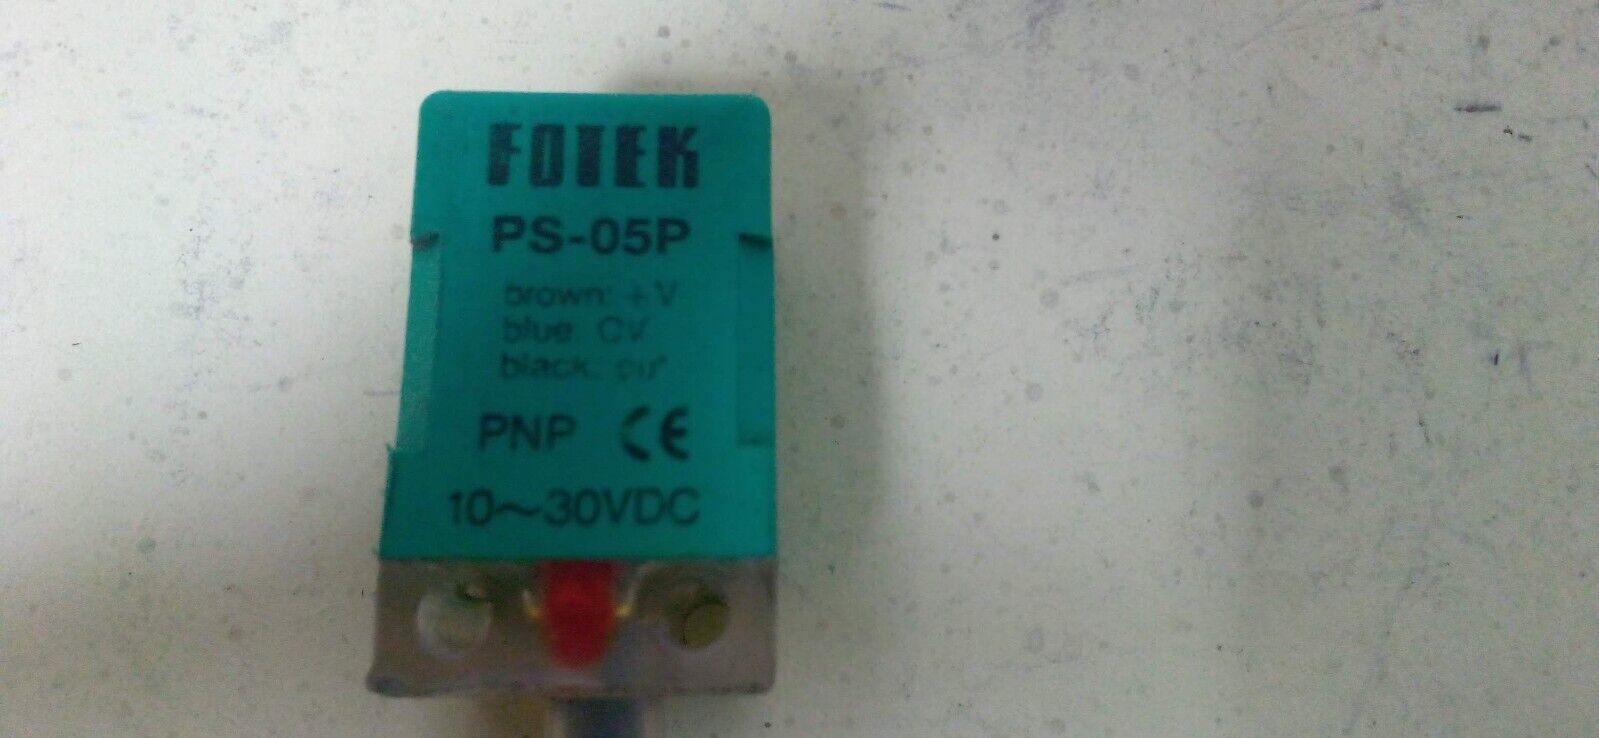 Primary image for Fotek PS-05P 10-30VDC 0019 Proximty Sensor PS05P